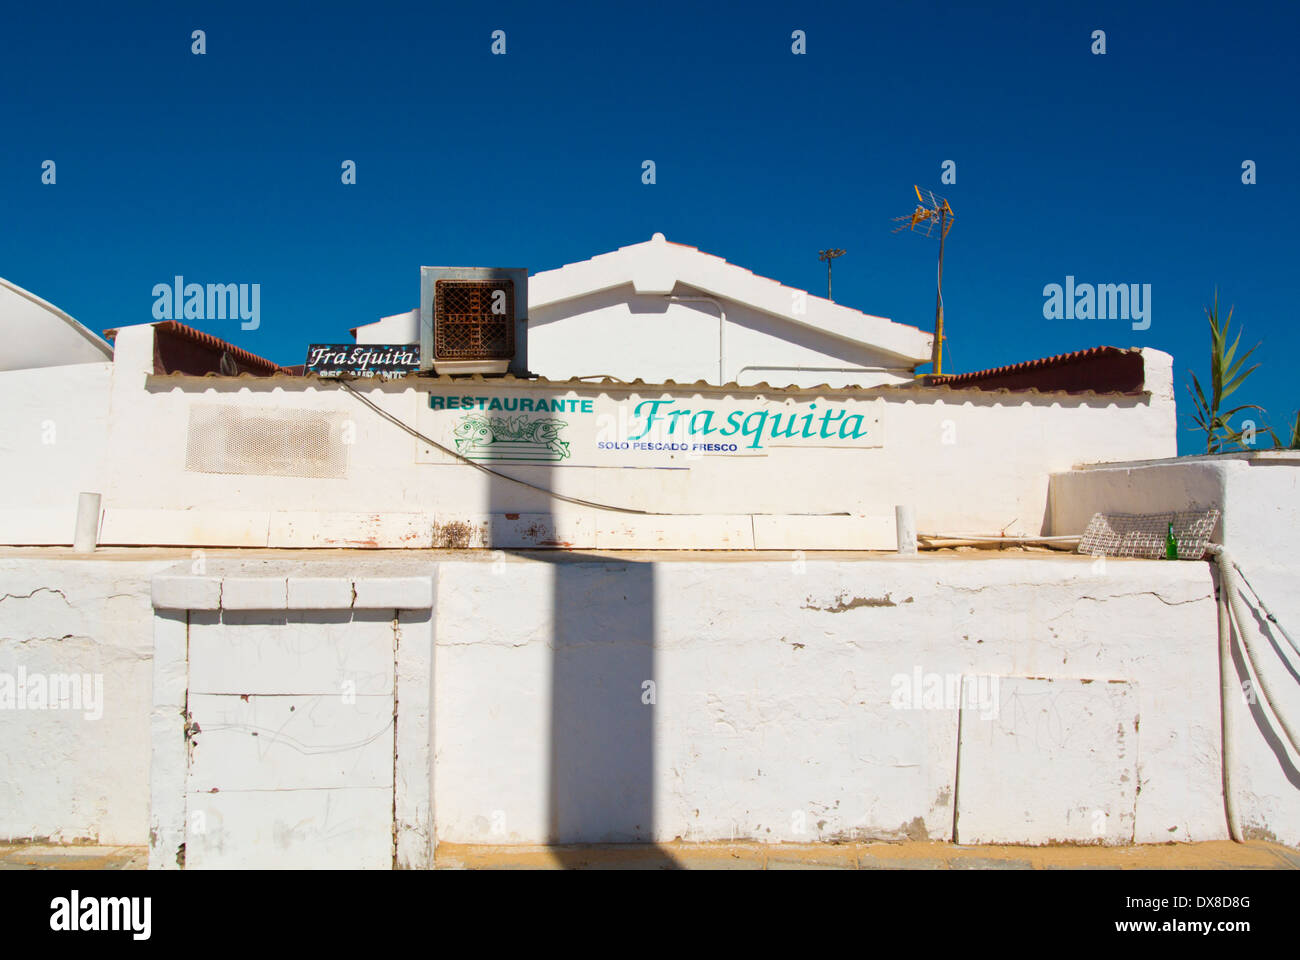 Frasquita seafood restaurant, Caleta de Fuste, Fuerteventura, Canary Islands, Spain, Europe Stock Photo